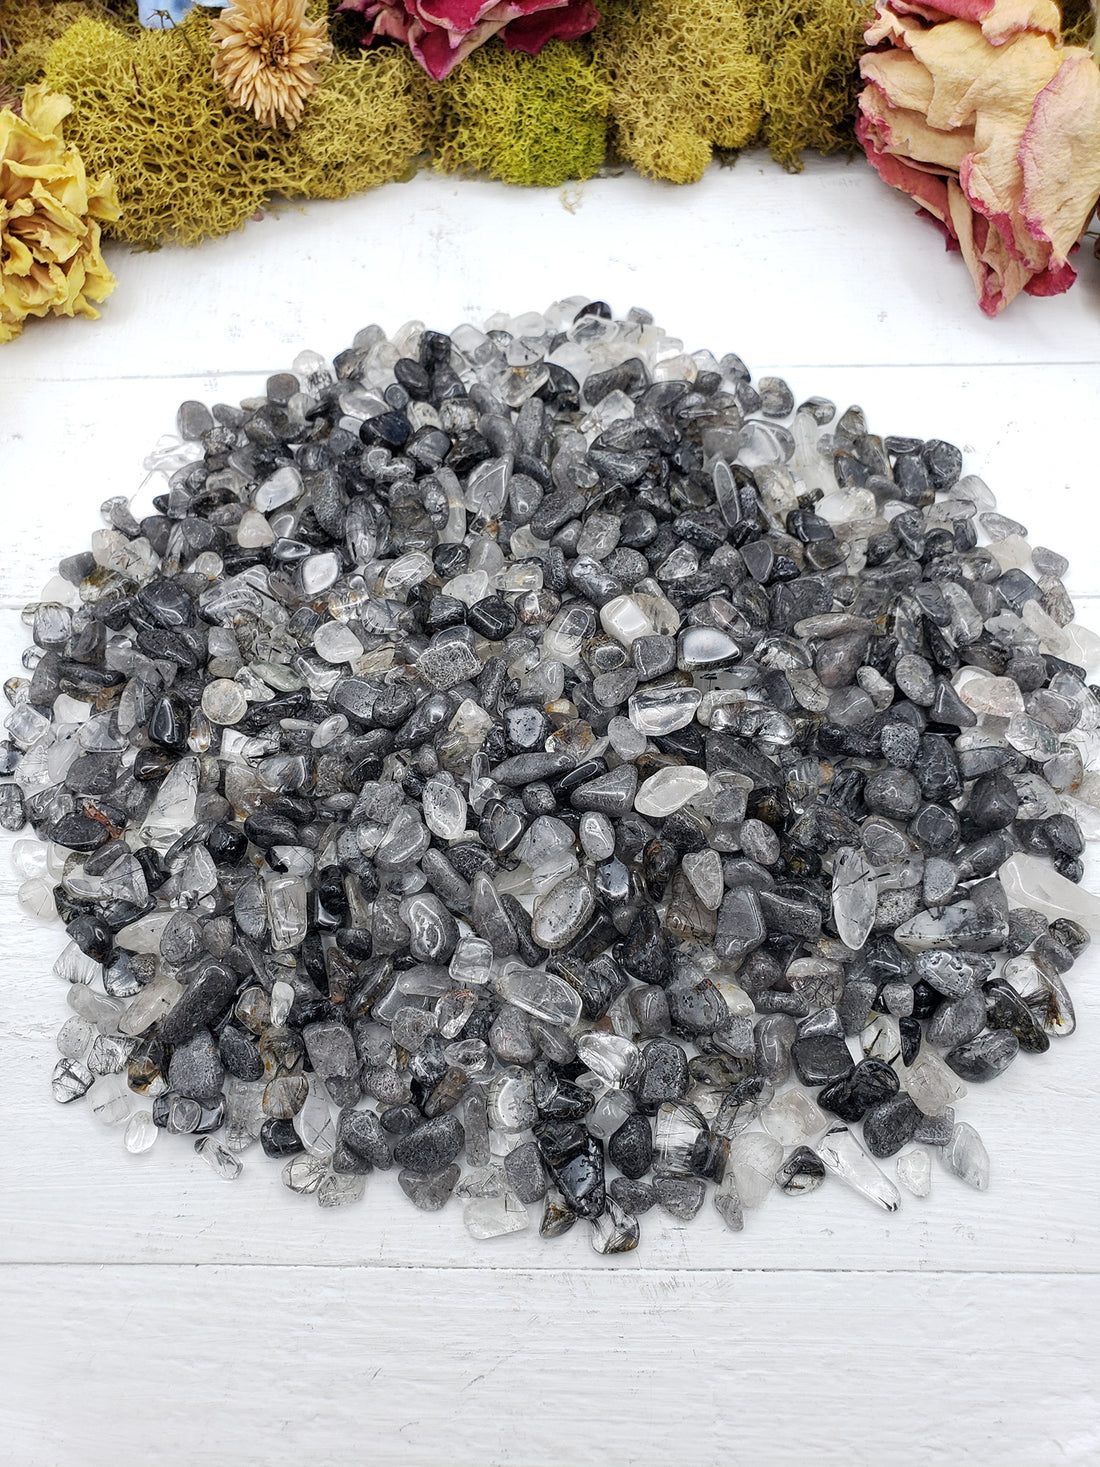 eight ounces of black tourmaline rutilated quartz on display